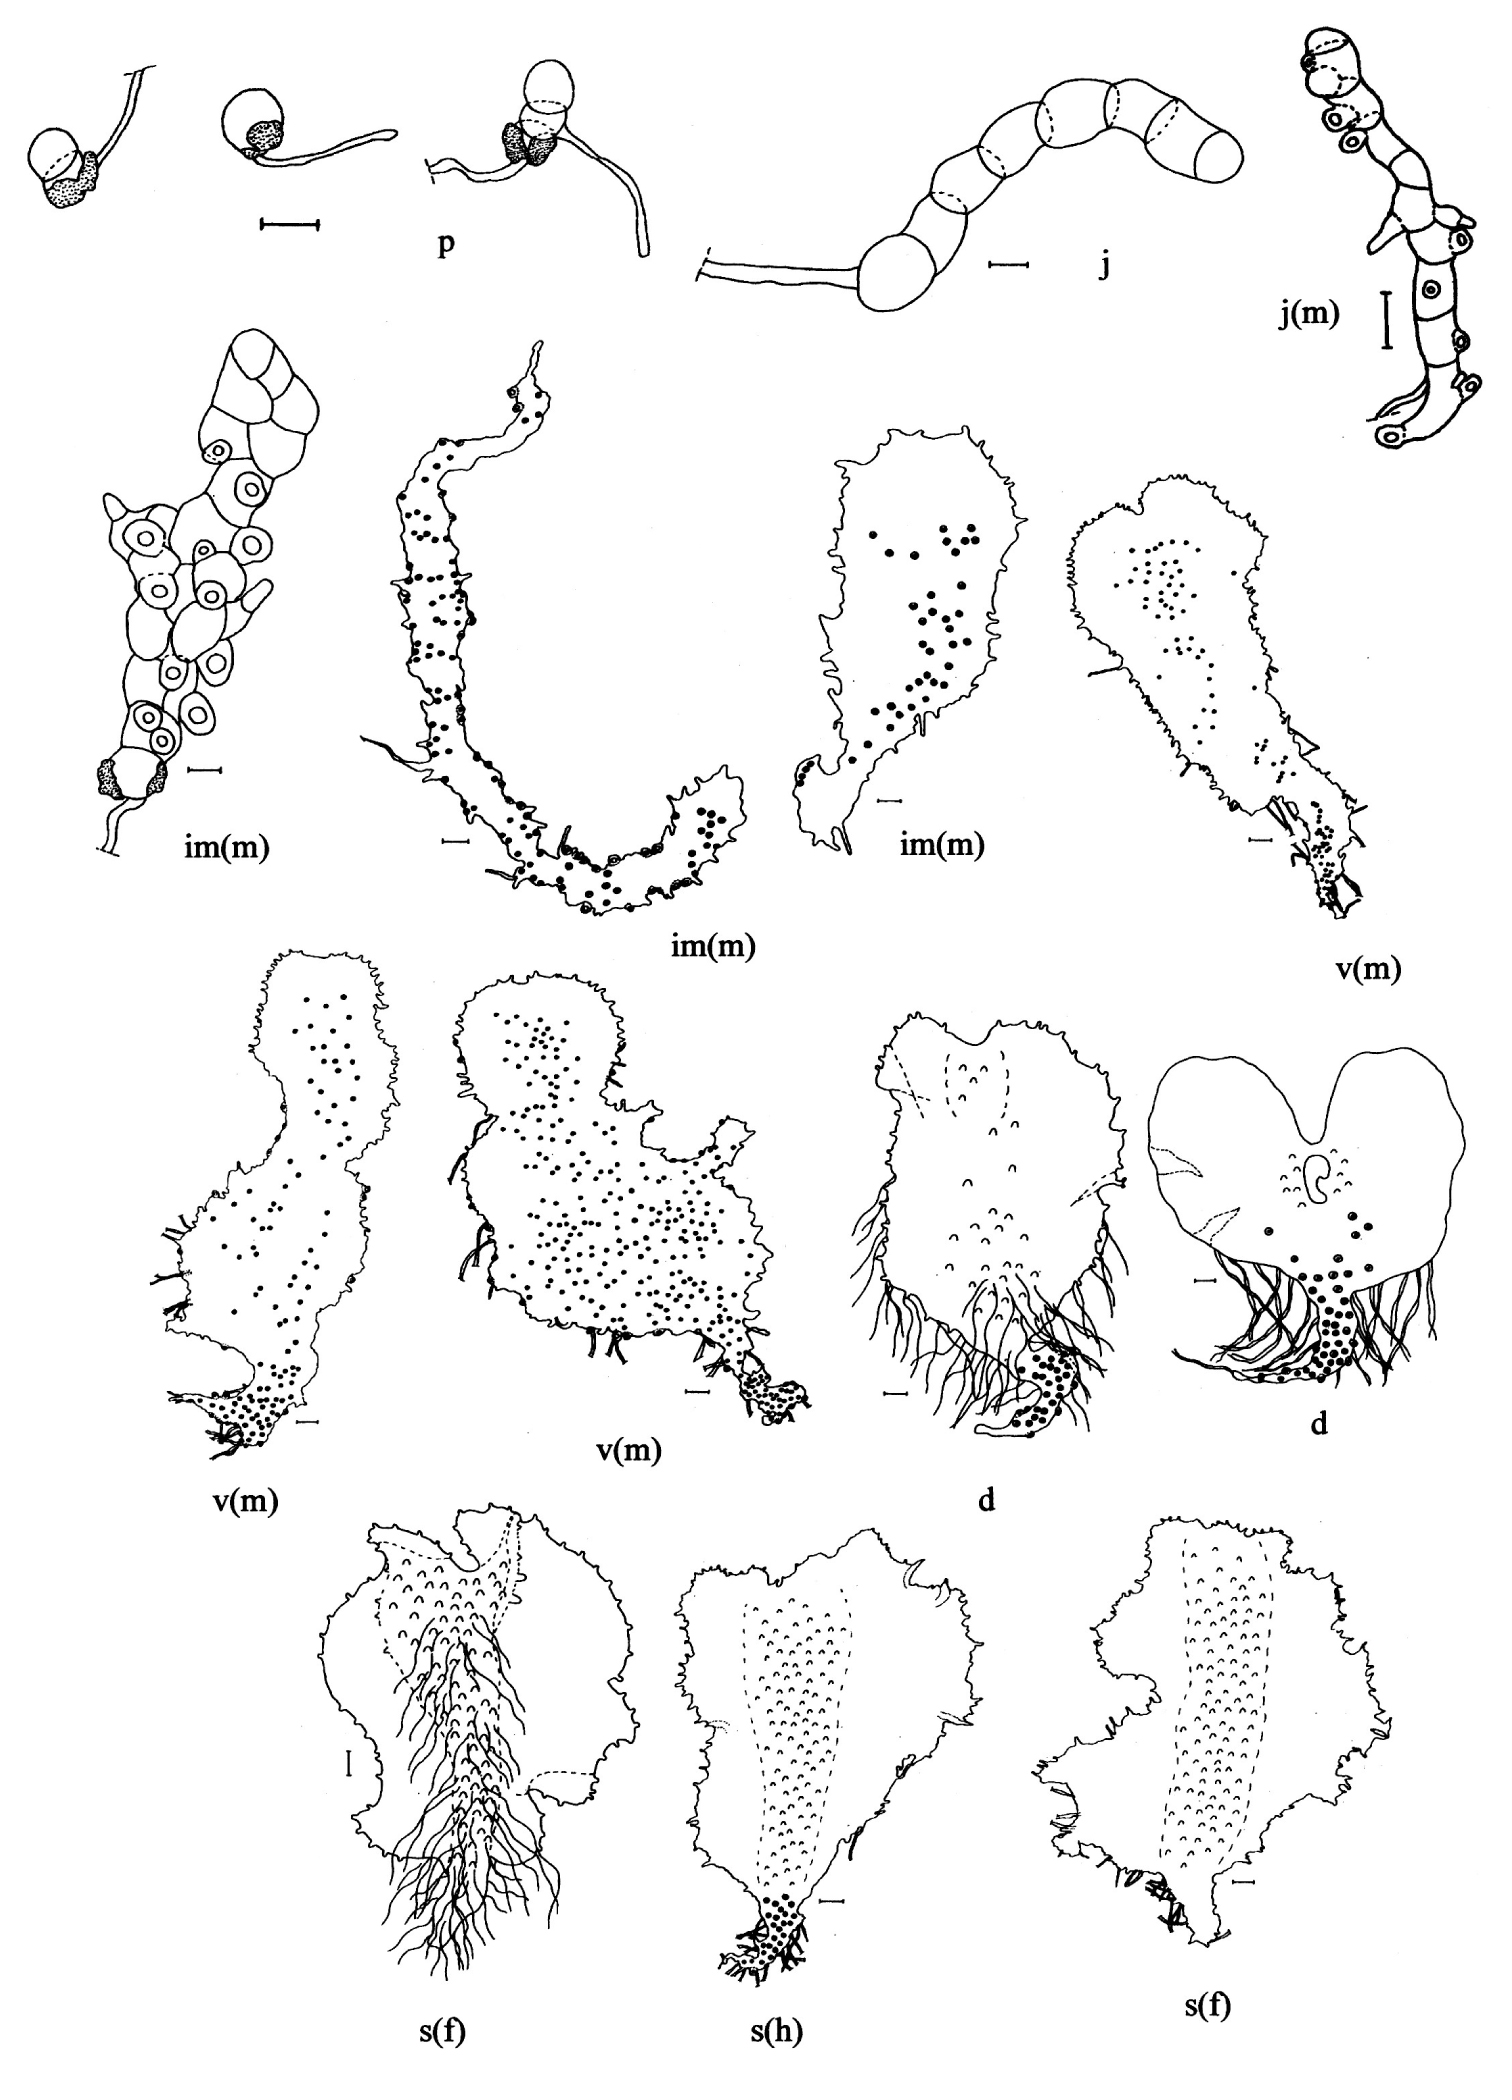 Fig. 1. The age-sexual states of the ontogeny of gametophyte Asplenium adiantum-nigrum: p – plantlet; j – juvenile; j (m) – juvenile male proliferous; im (m) – immature male proliferous; v (m) – virginal male proliferous; d – definitive proliferous; s (f) – senile female proliferous; s (h) – senile hermaphrodite proliferous. Scale: 0.1 mm.